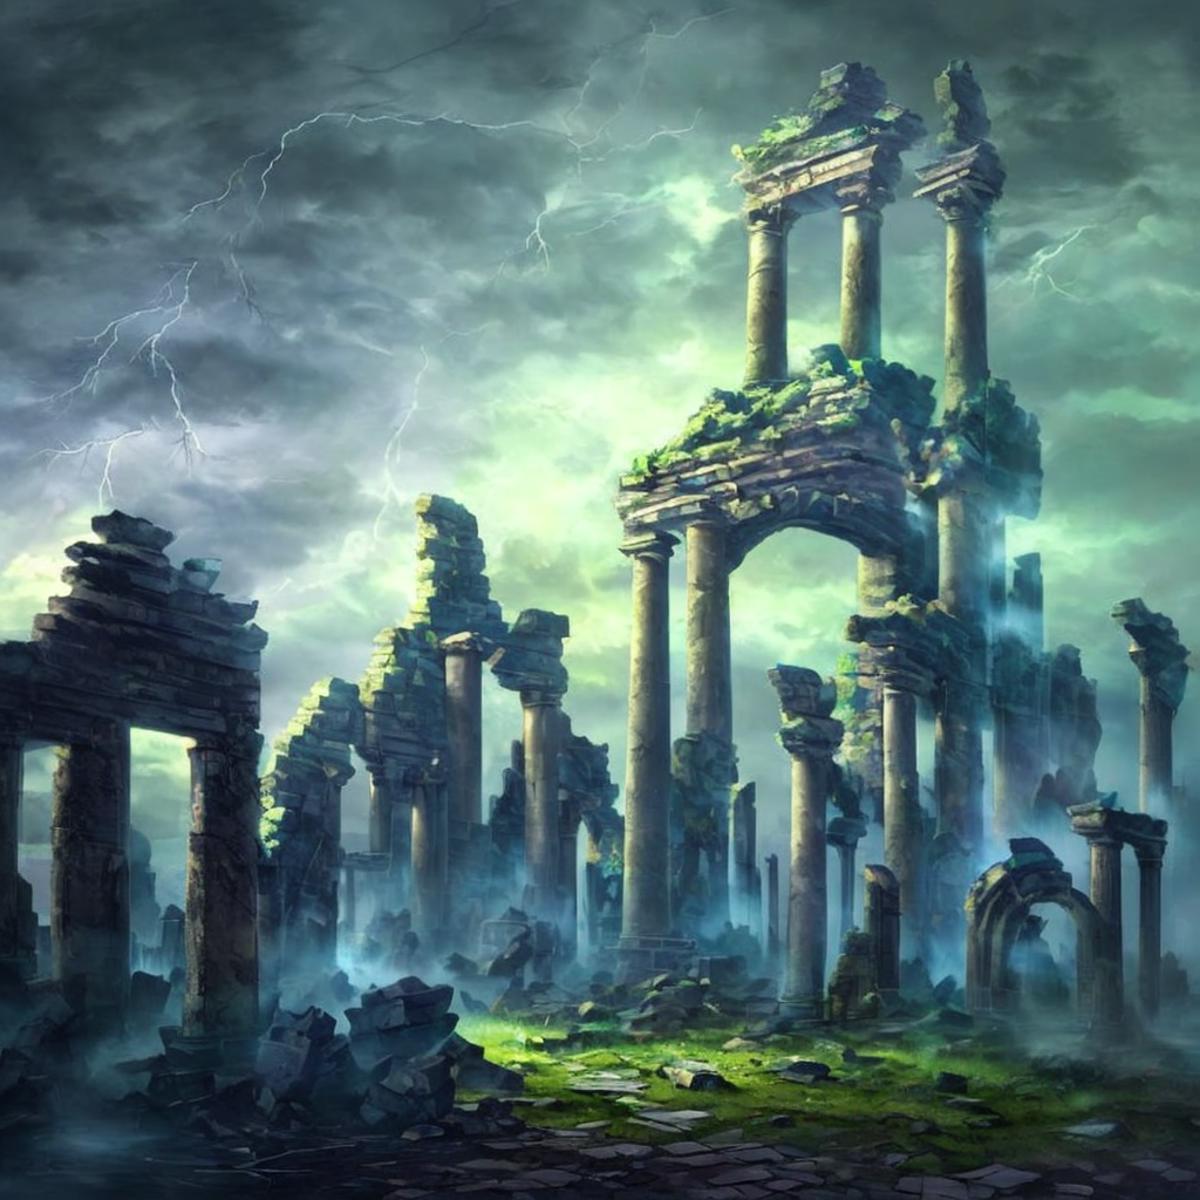 Fantasy Ruins image by Jabberwocky207